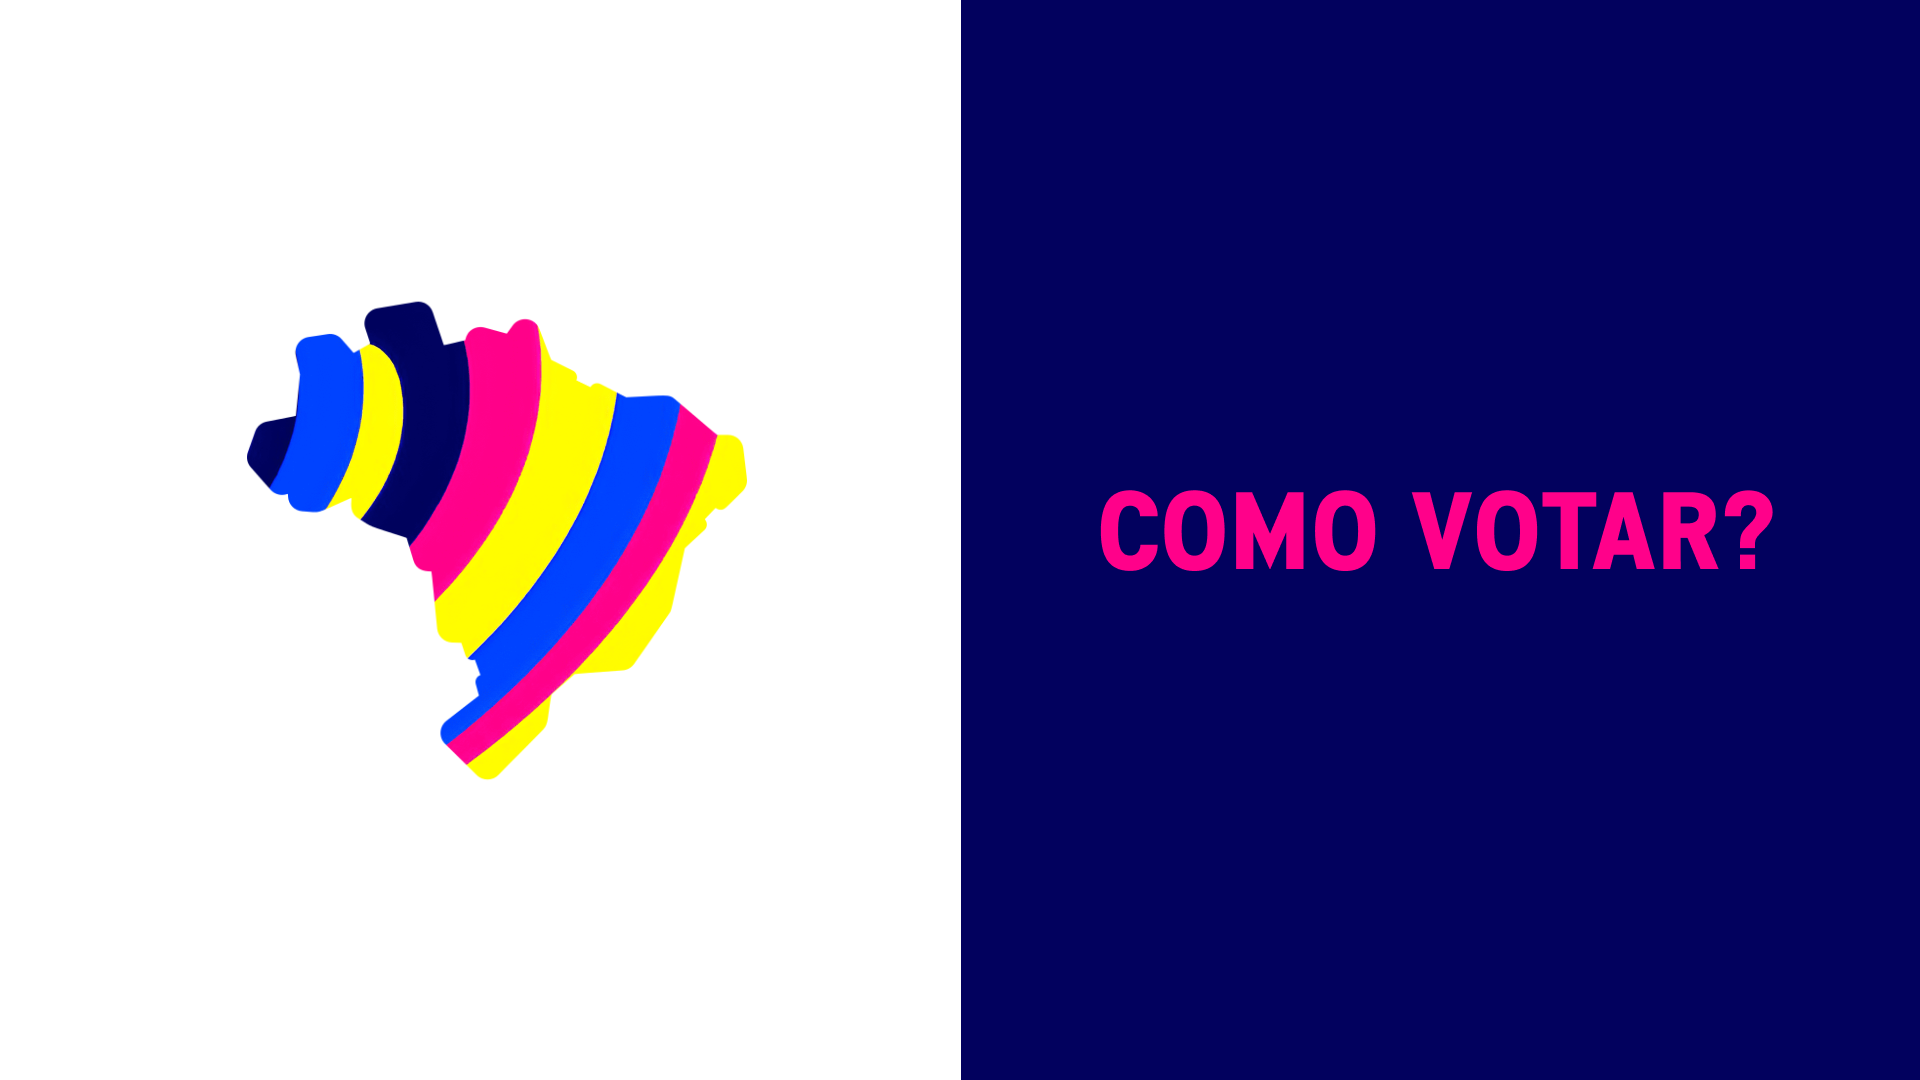 Uma música por país, Jogos Pan-Americanos Santiago 2023 - playlist by  kolibli